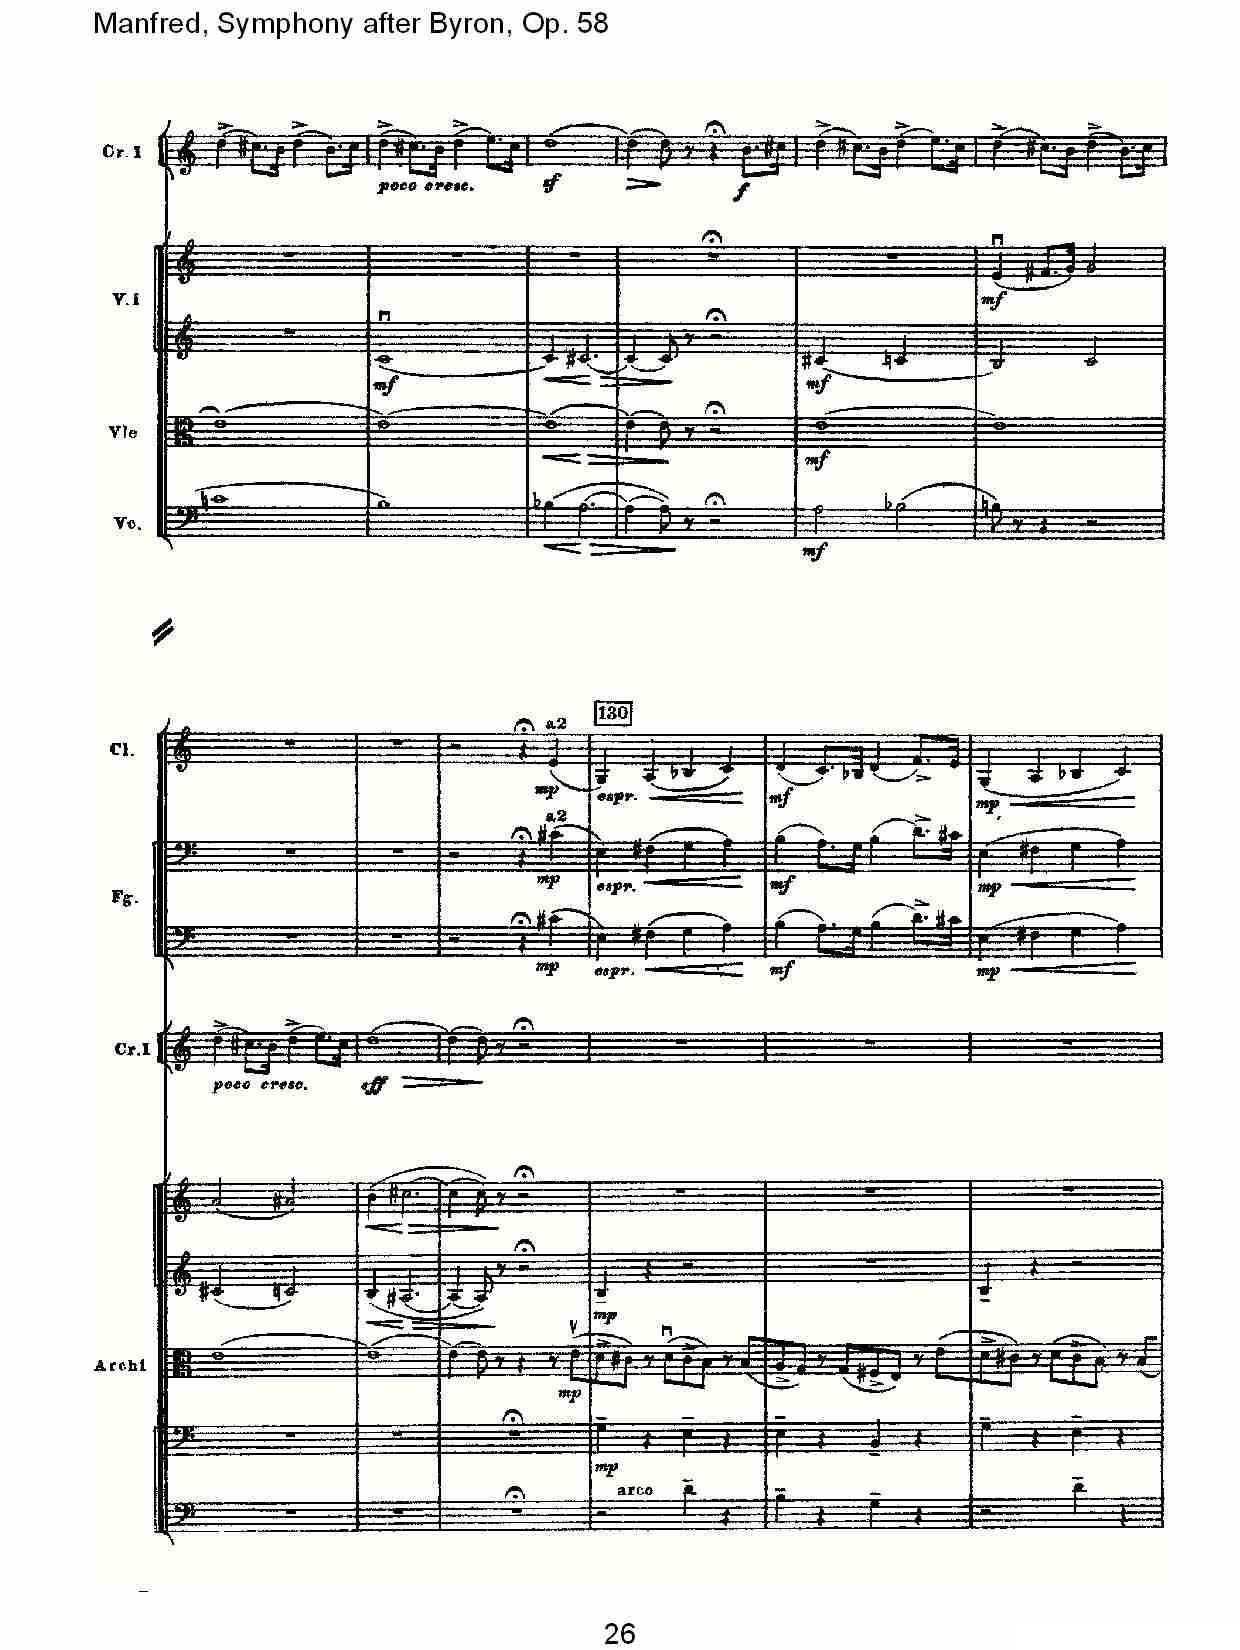 Manfred, Symphony after Byron, Op.58第一乐章（一）其它曲谱（图26）